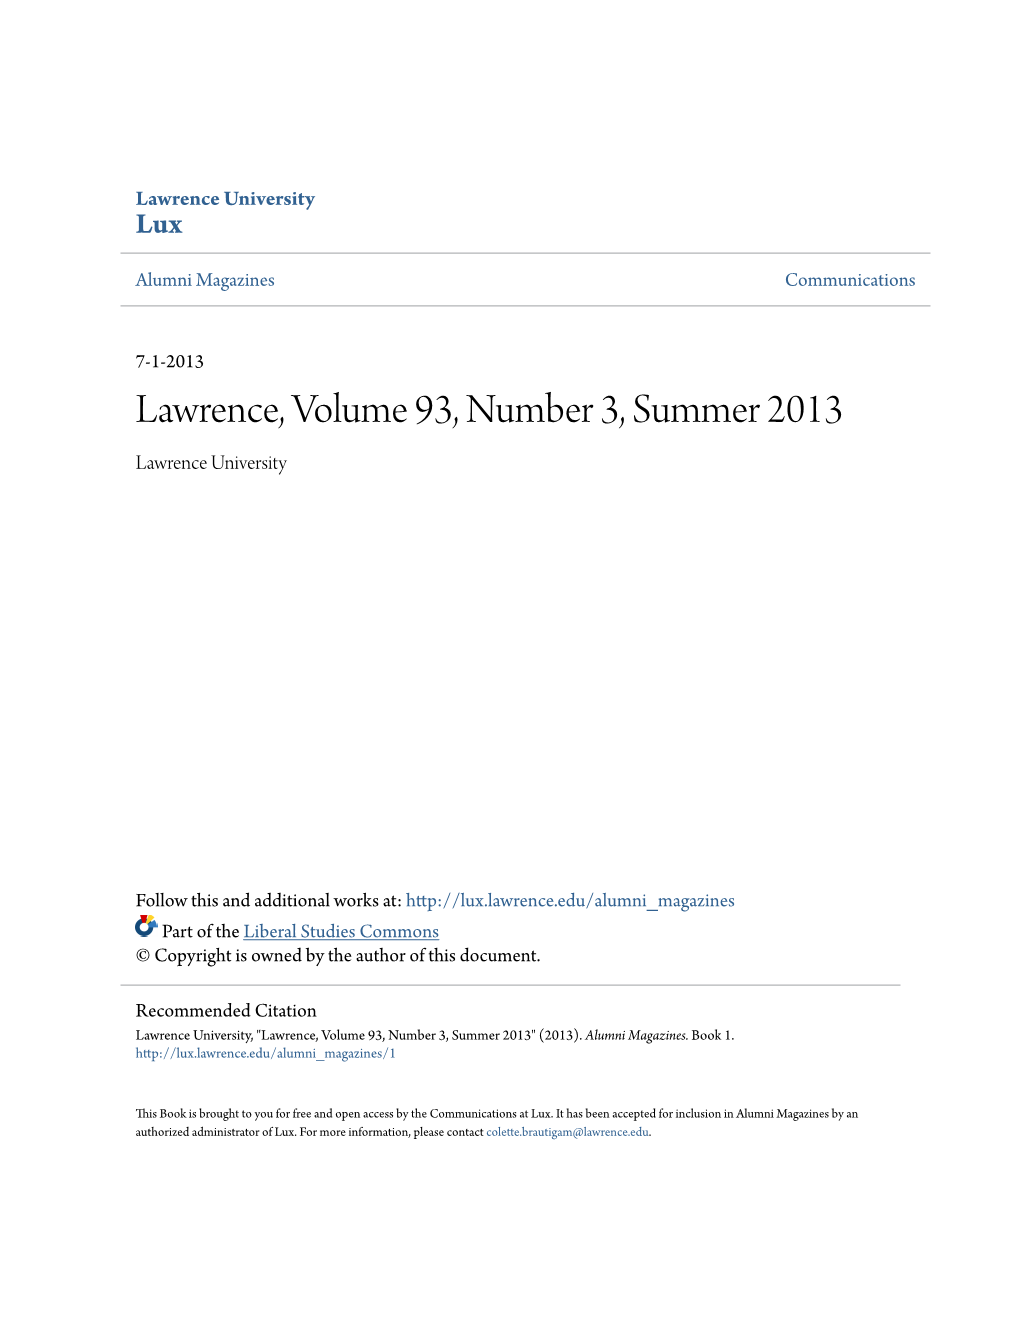 Lawrence, Volume 93, Number 3, Summer 2013 Lawrence University